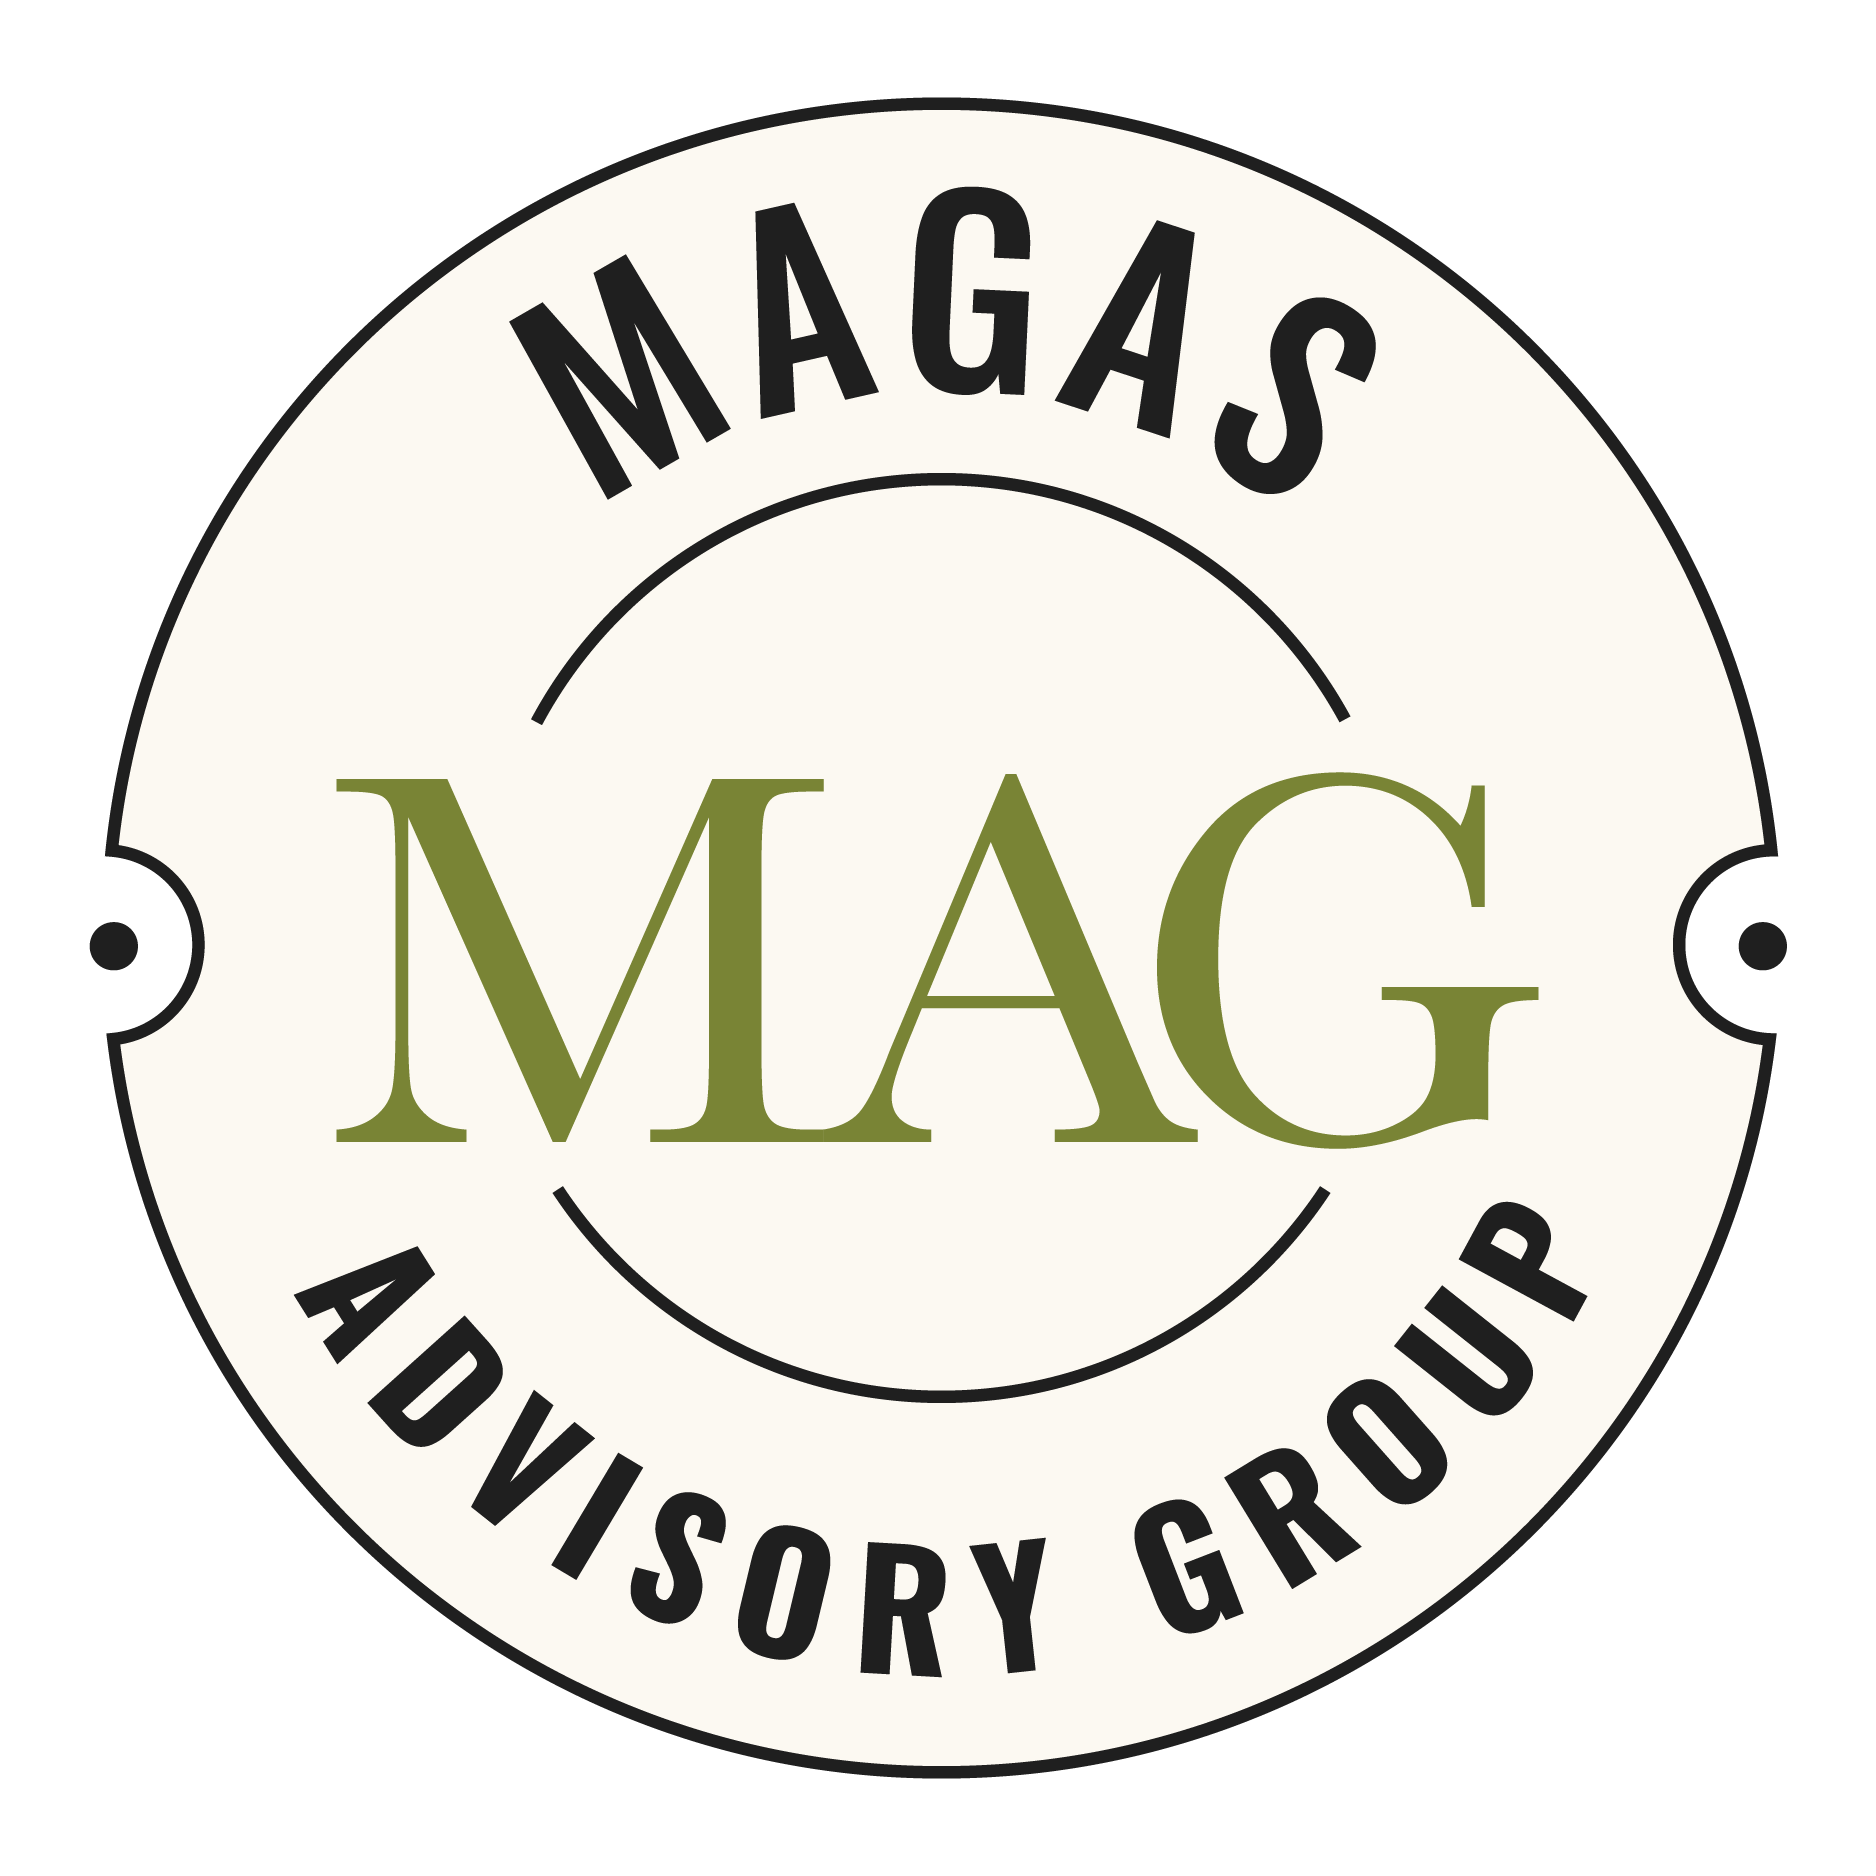 Magas-Advisory-Group